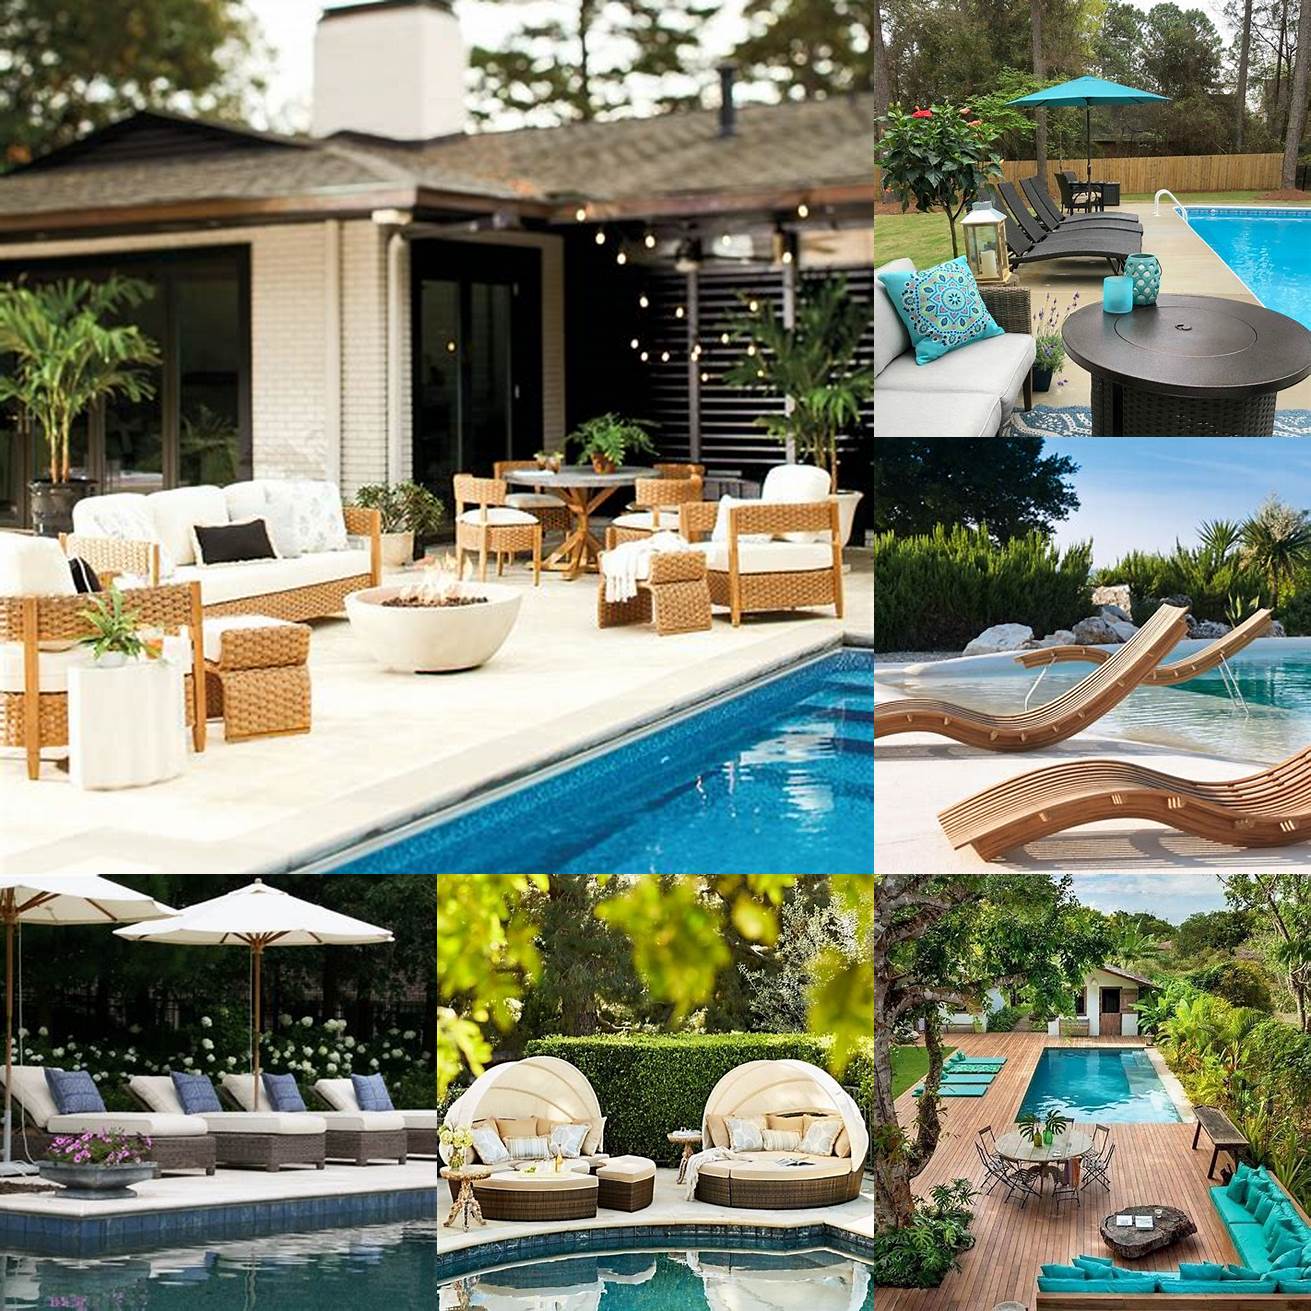 Teak outdoor furniture in a pool area